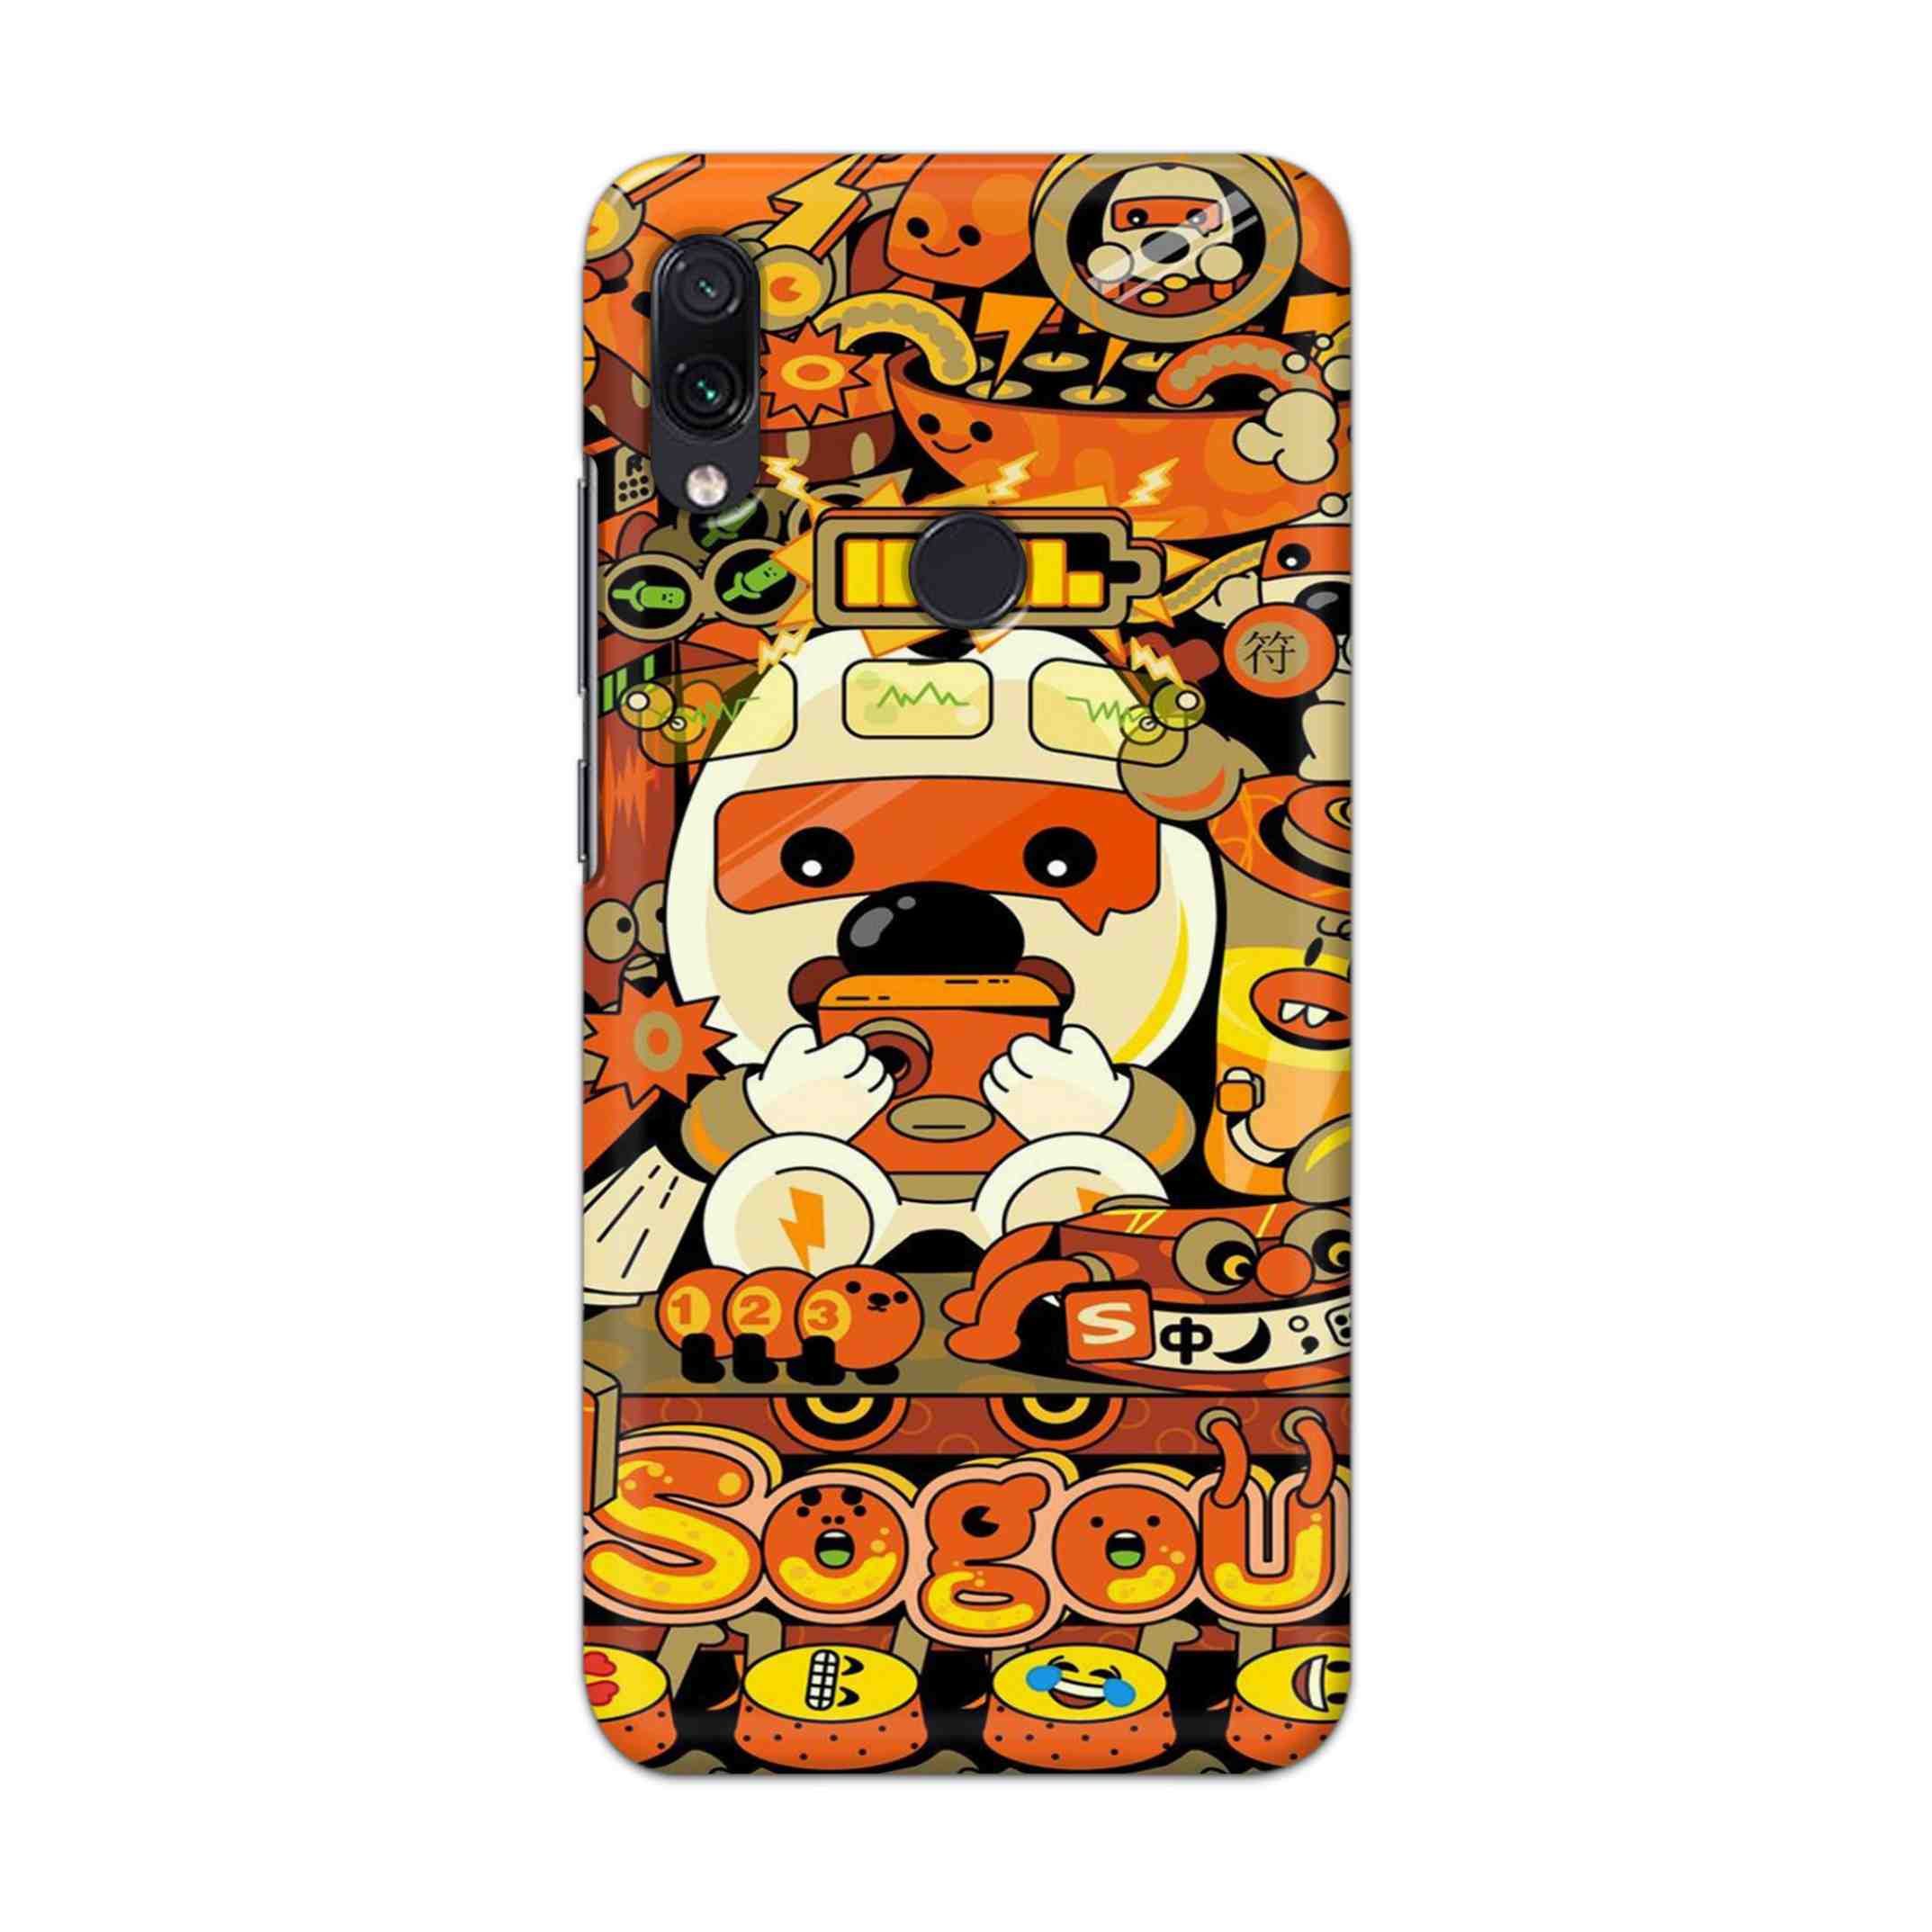 Buy Sogou Hard Back Mobile Phone Case Cover For Xiaomi Redmi 7 Online